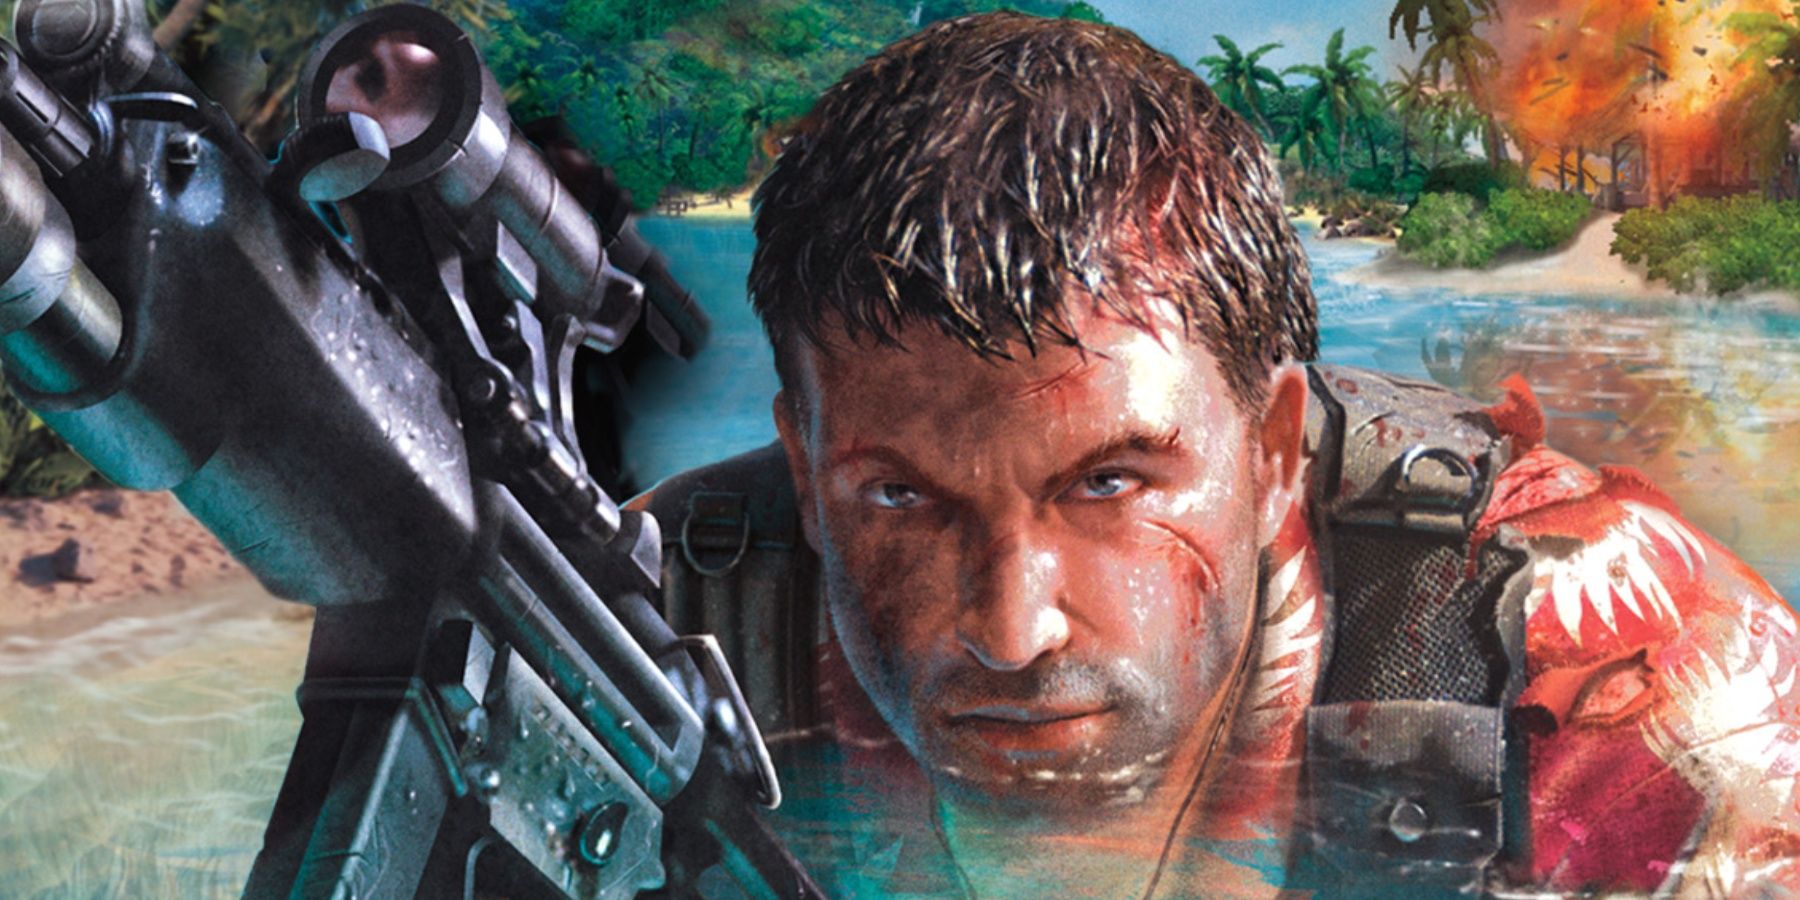 Far Cry 1 remake almost guaranteed following massive leak